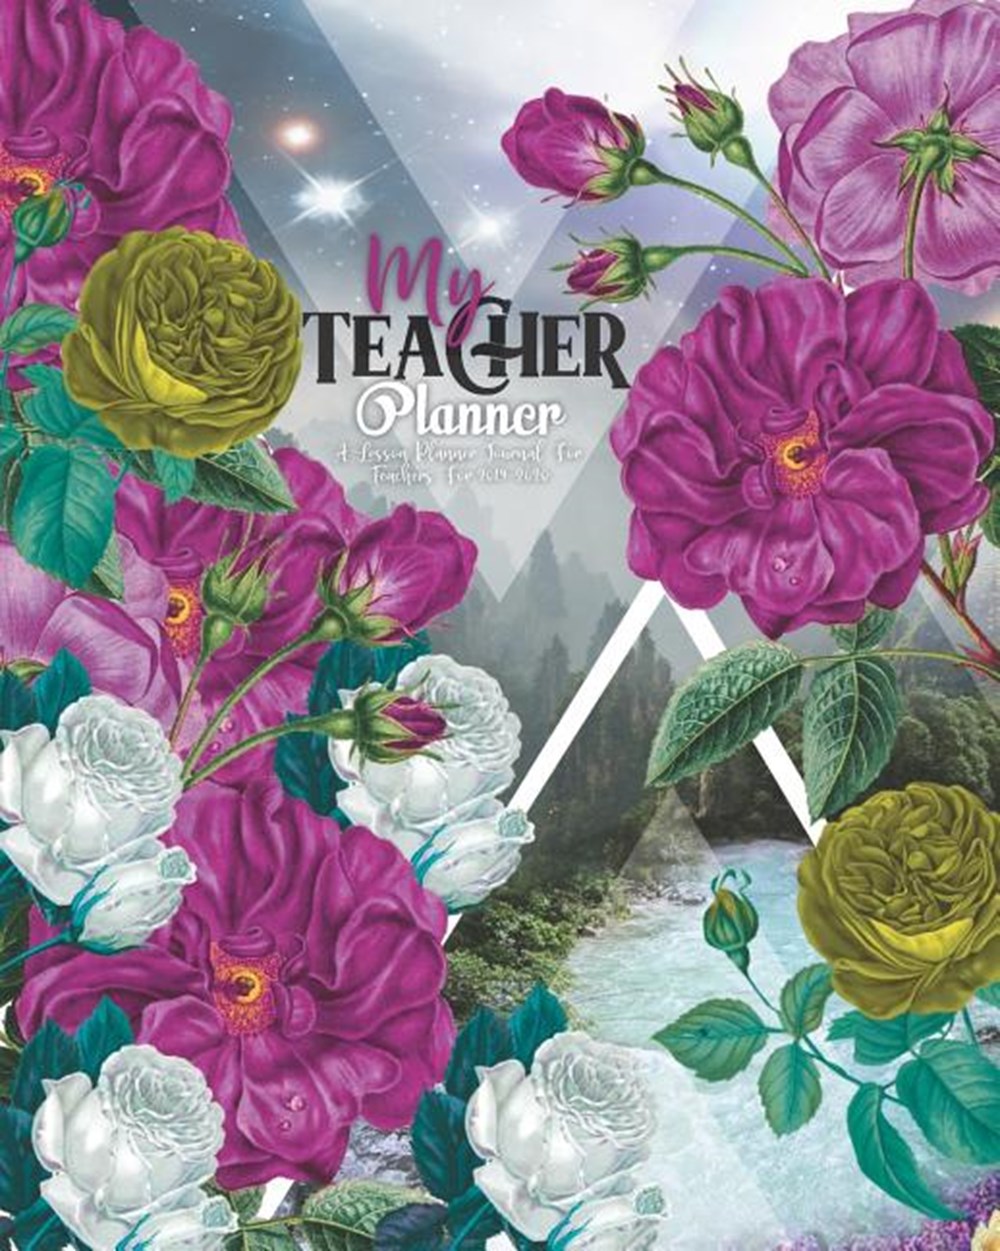 My Teacher Planner A Lesson Planner Journal For Teachers For 2019-2020: Teacher Lesson Planner, Reco